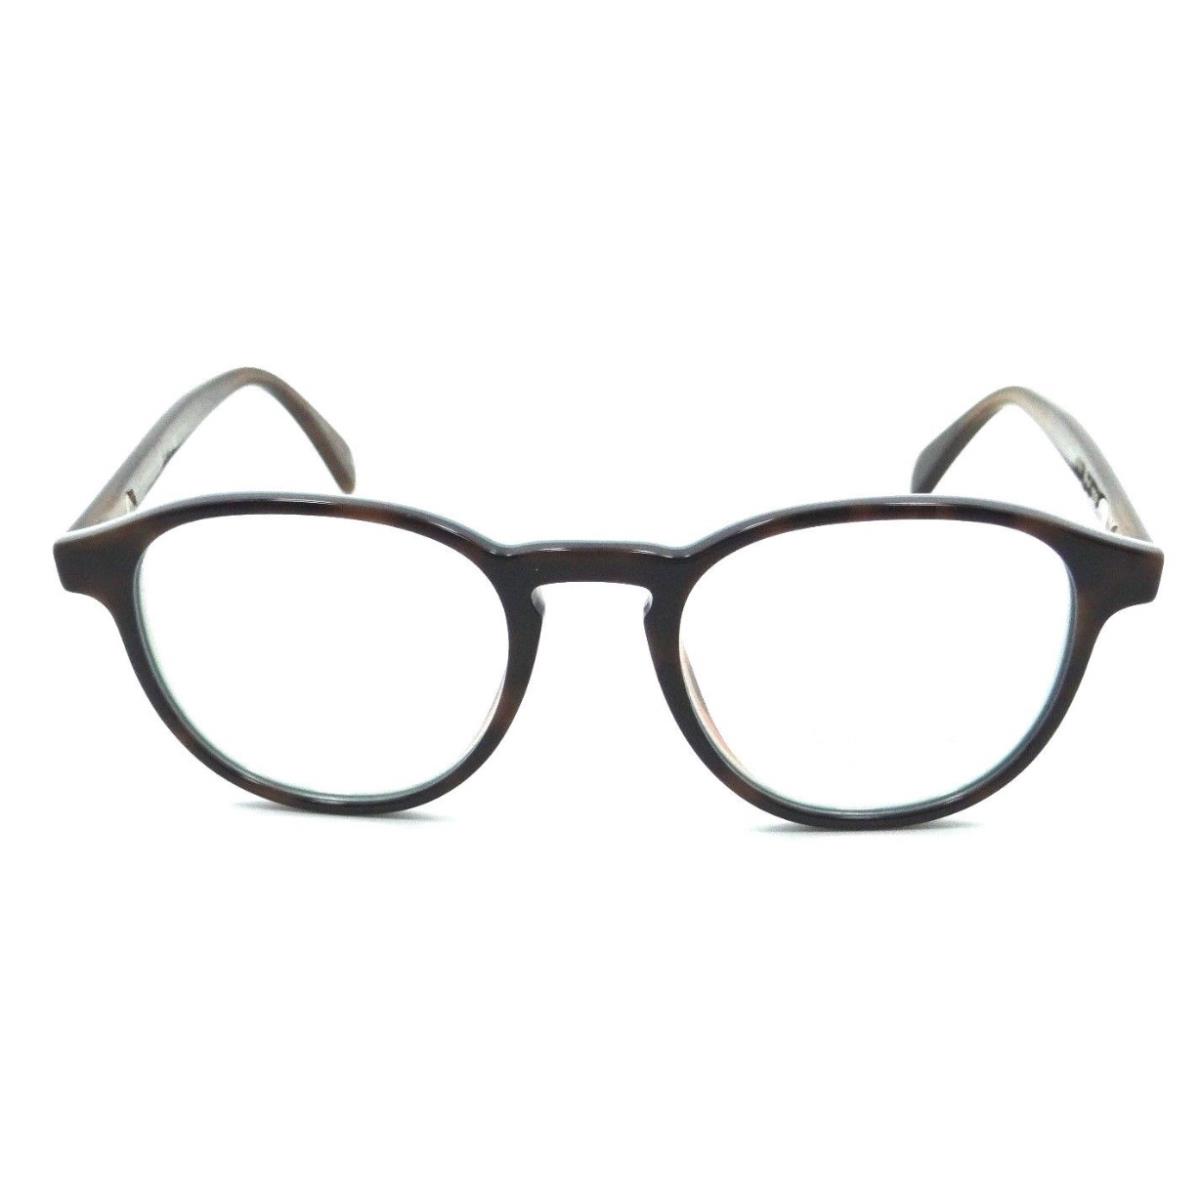 Paul Smith PS 8263 -1617 Eyeglasses Deluxe Artists Stripe 48mm